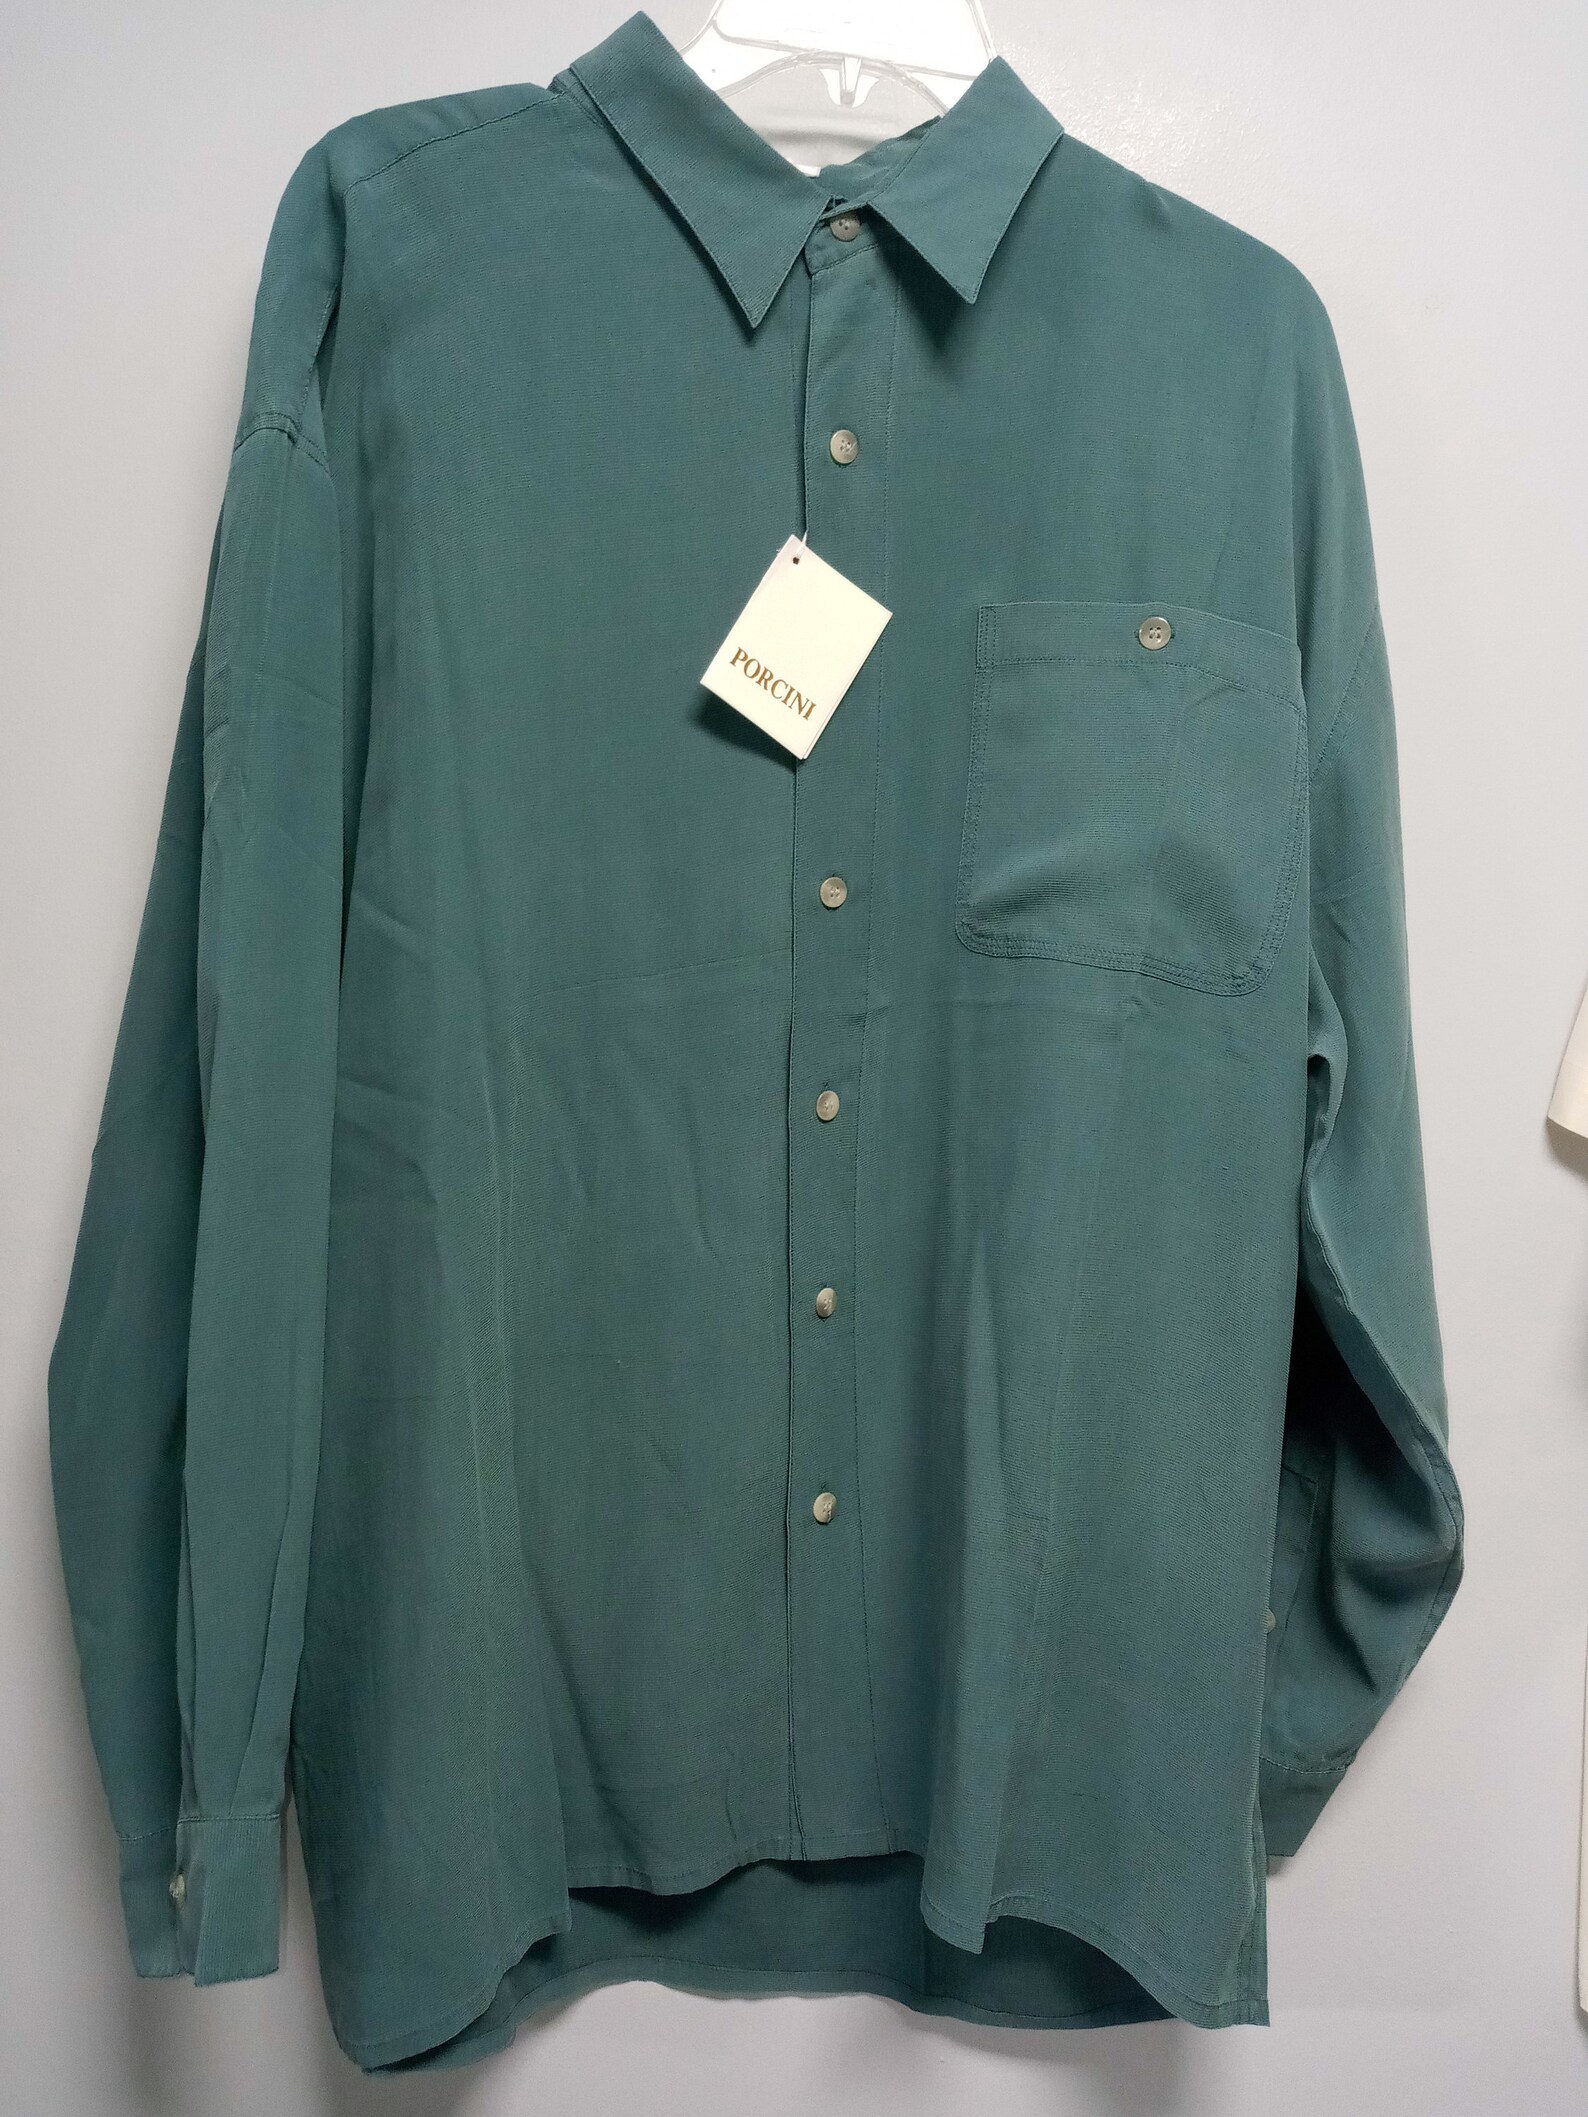 Vintage Long Sleeve Shirt by PORCINI 100% Silk never worn | Etsy